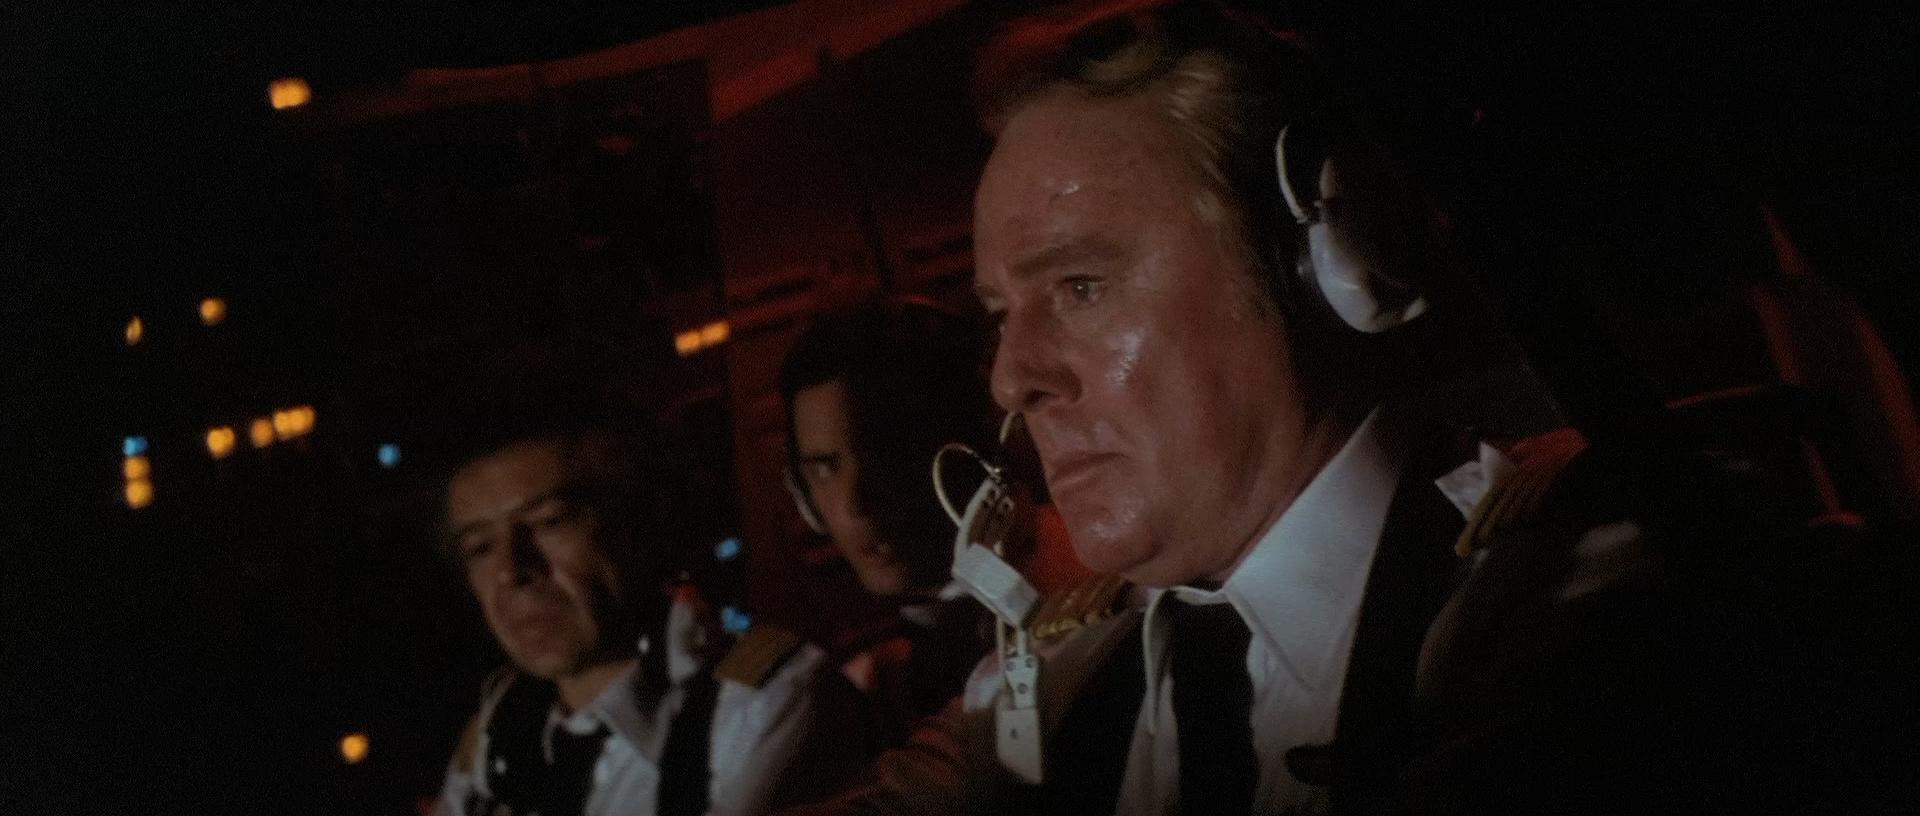 Concorde Affaire '79 (1979) Screenshot 2 